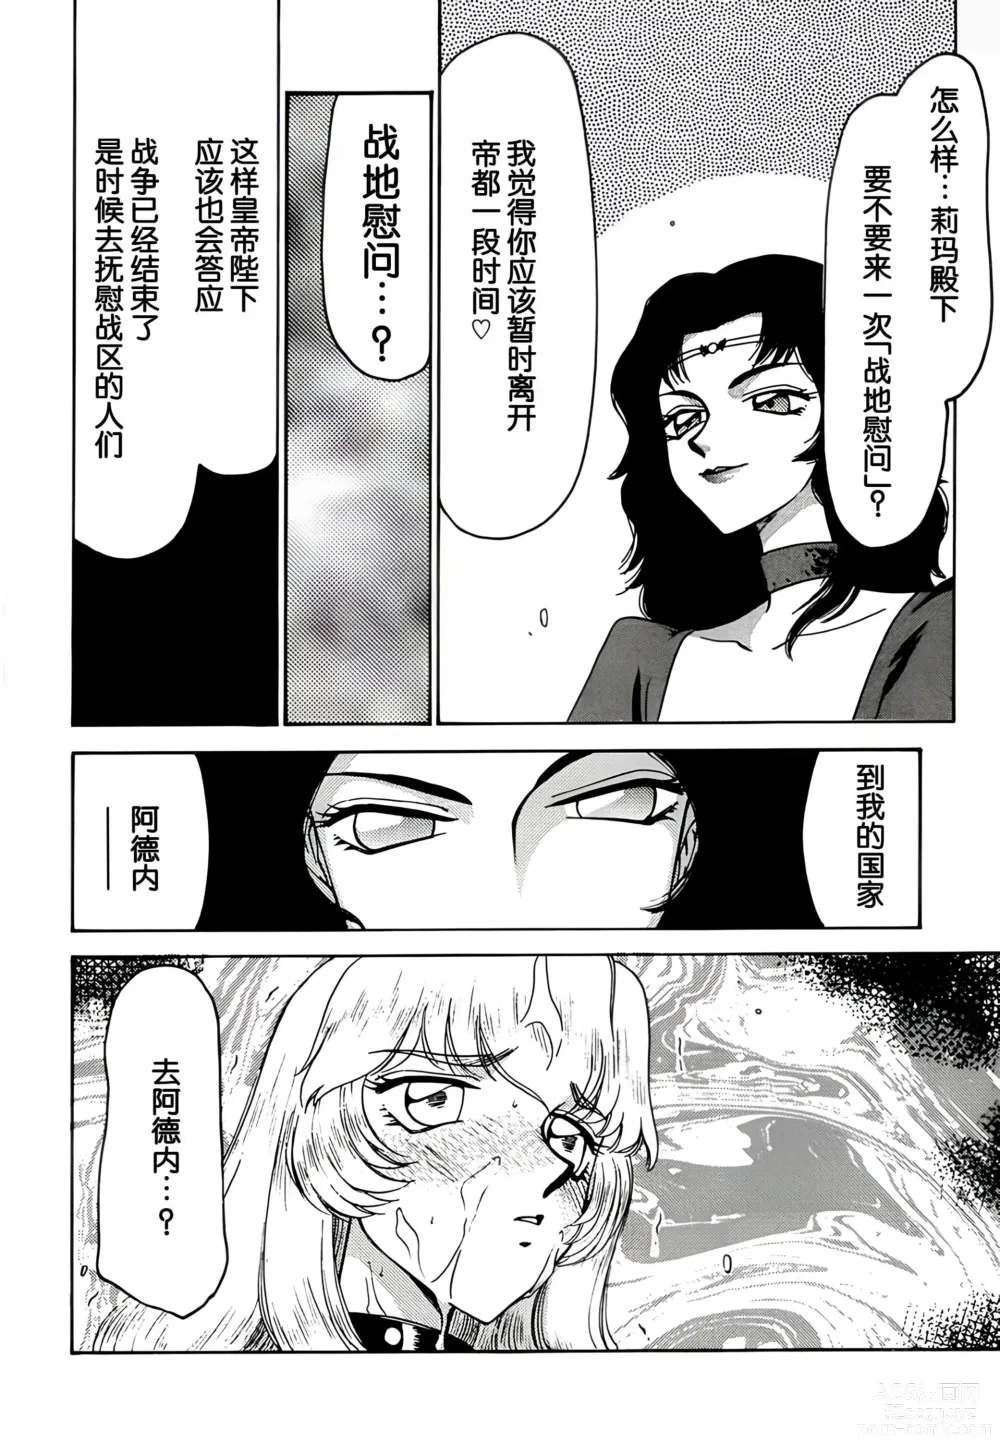 Page 71 of doujinshi Nise DRAGON BLOOD! 6